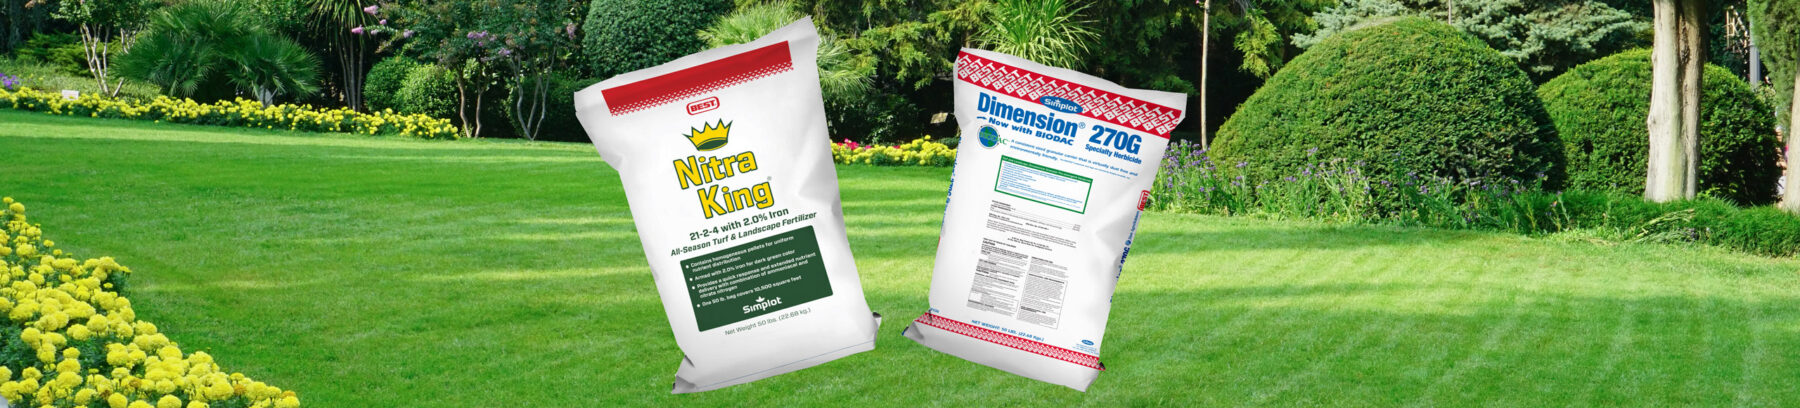 Nitrogen fertilizer and herbicide for your lawn